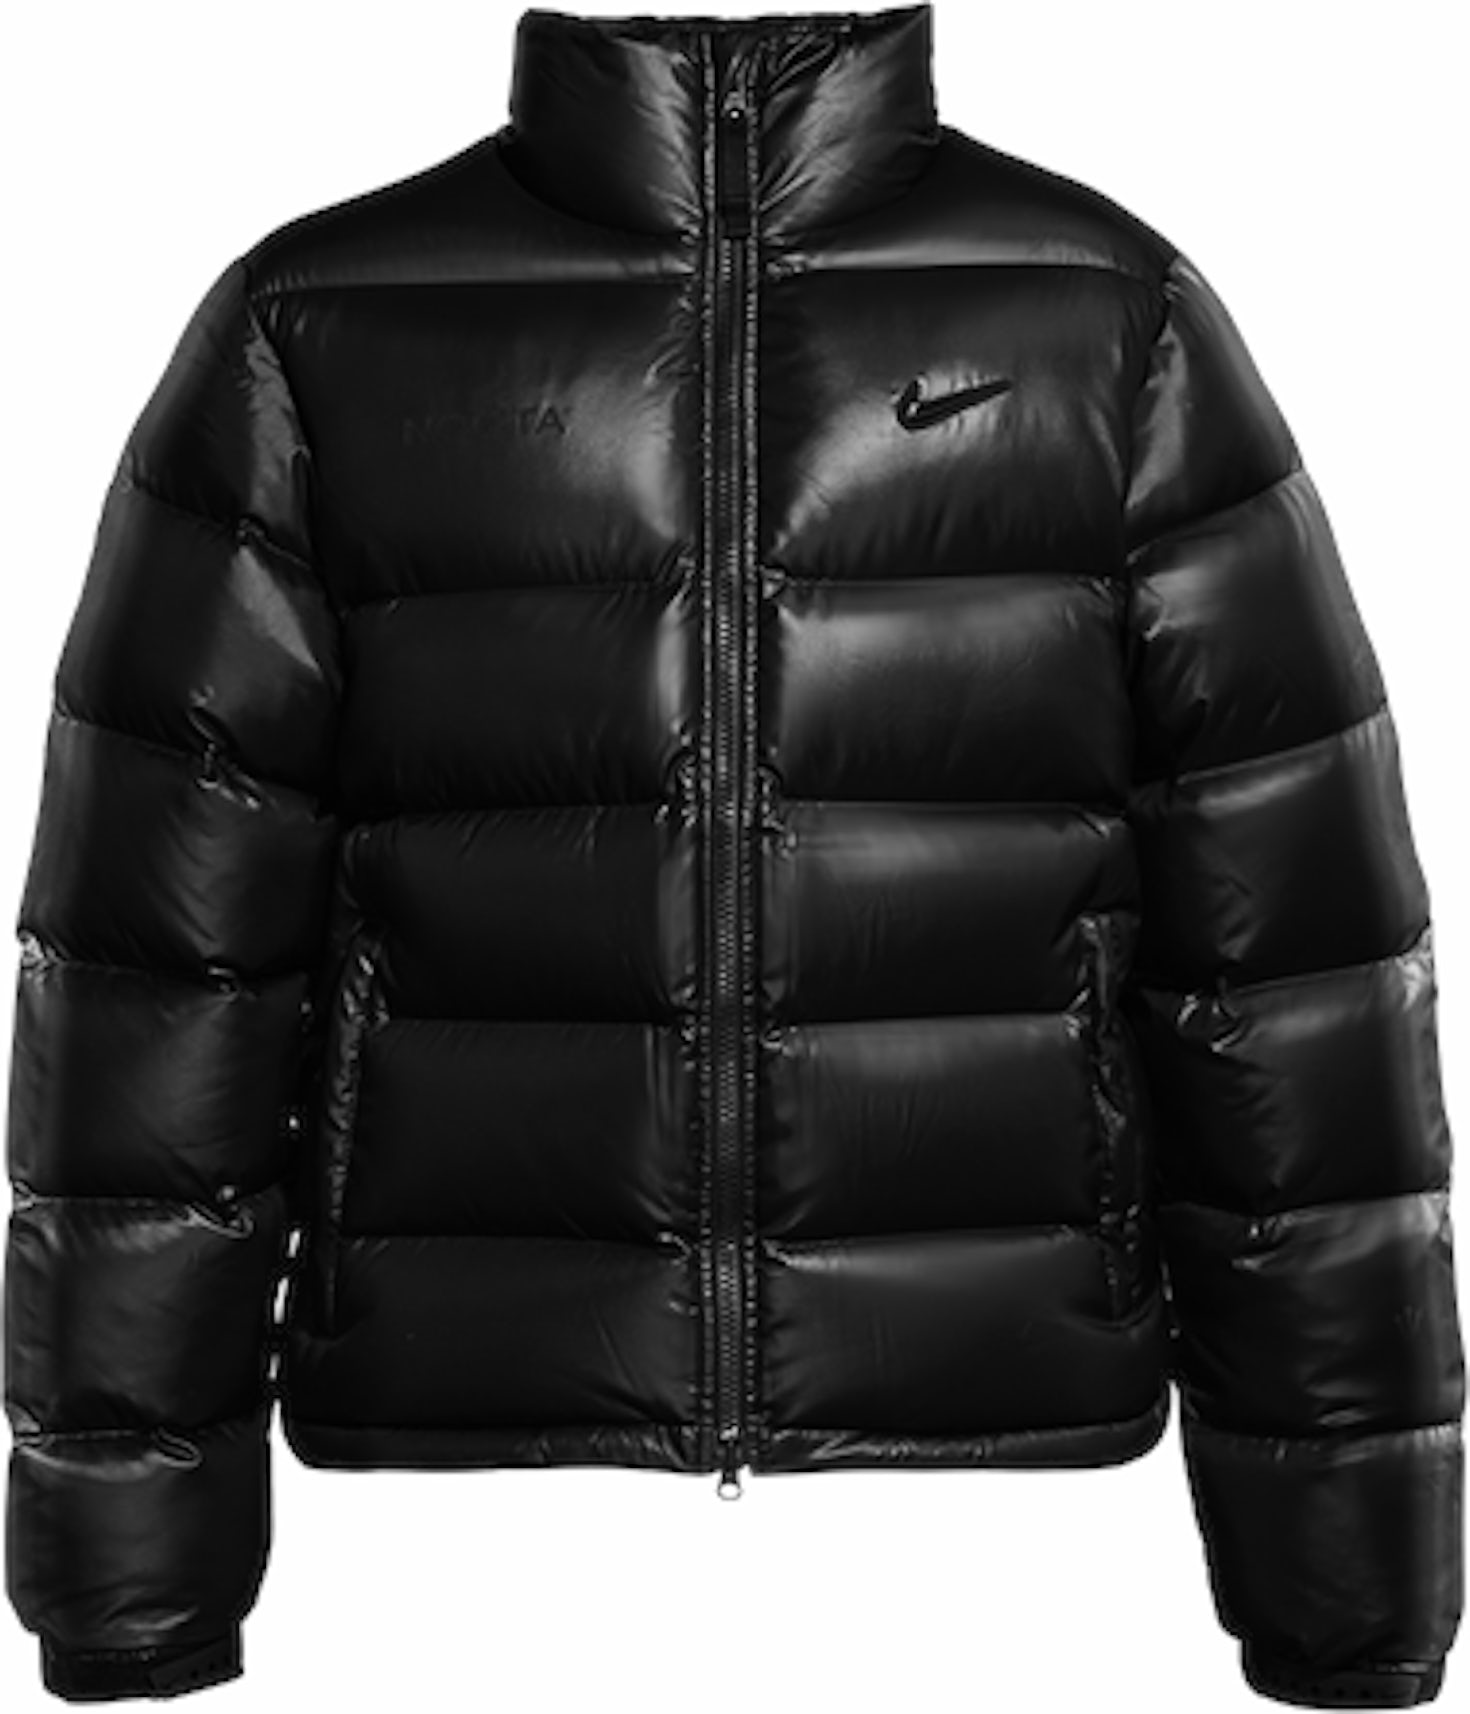 Nike x NOCTA Puffer Jacket Black - FW20 US